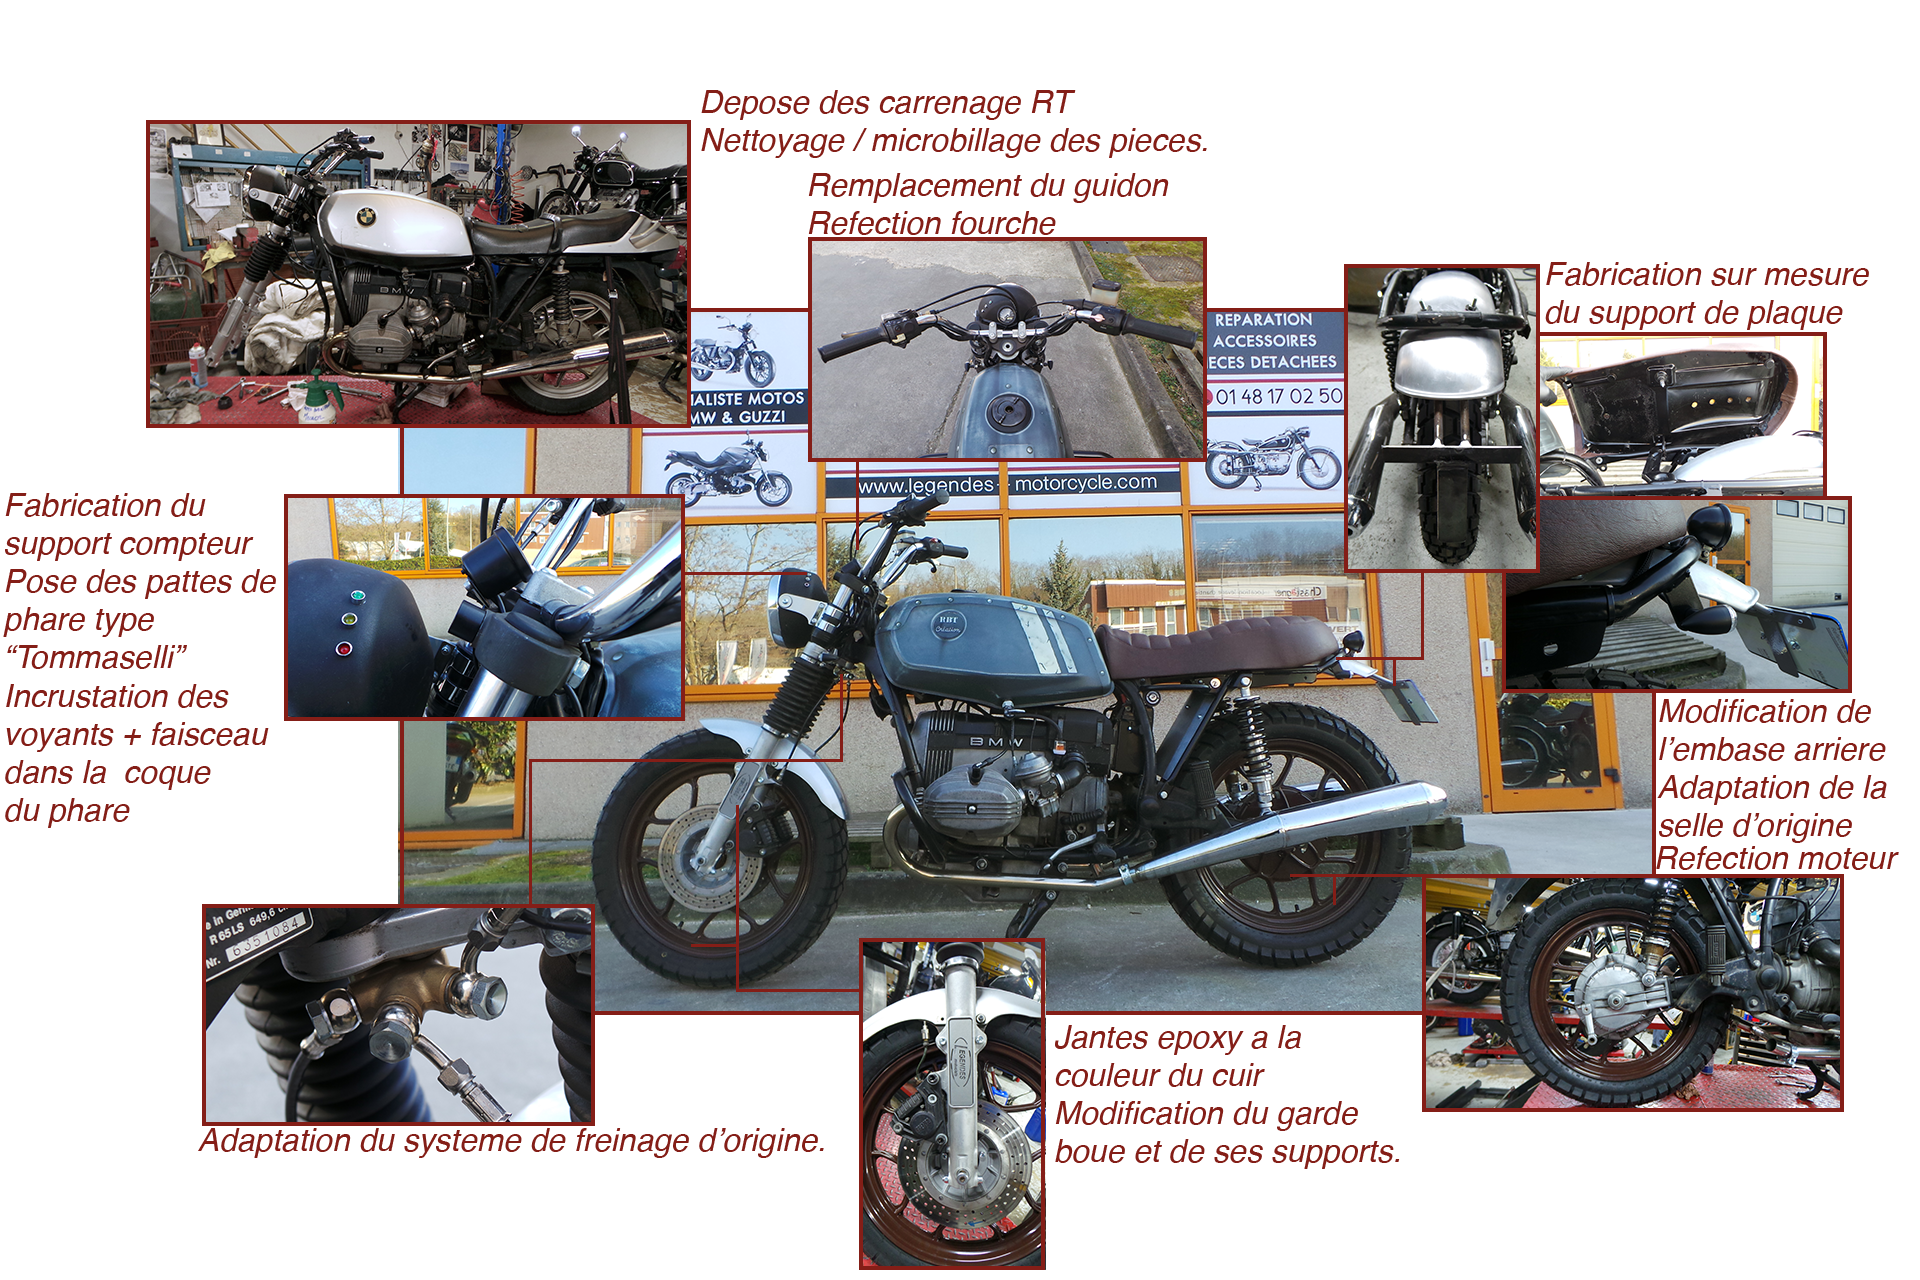 R65/7 customiser chez légendes motociste